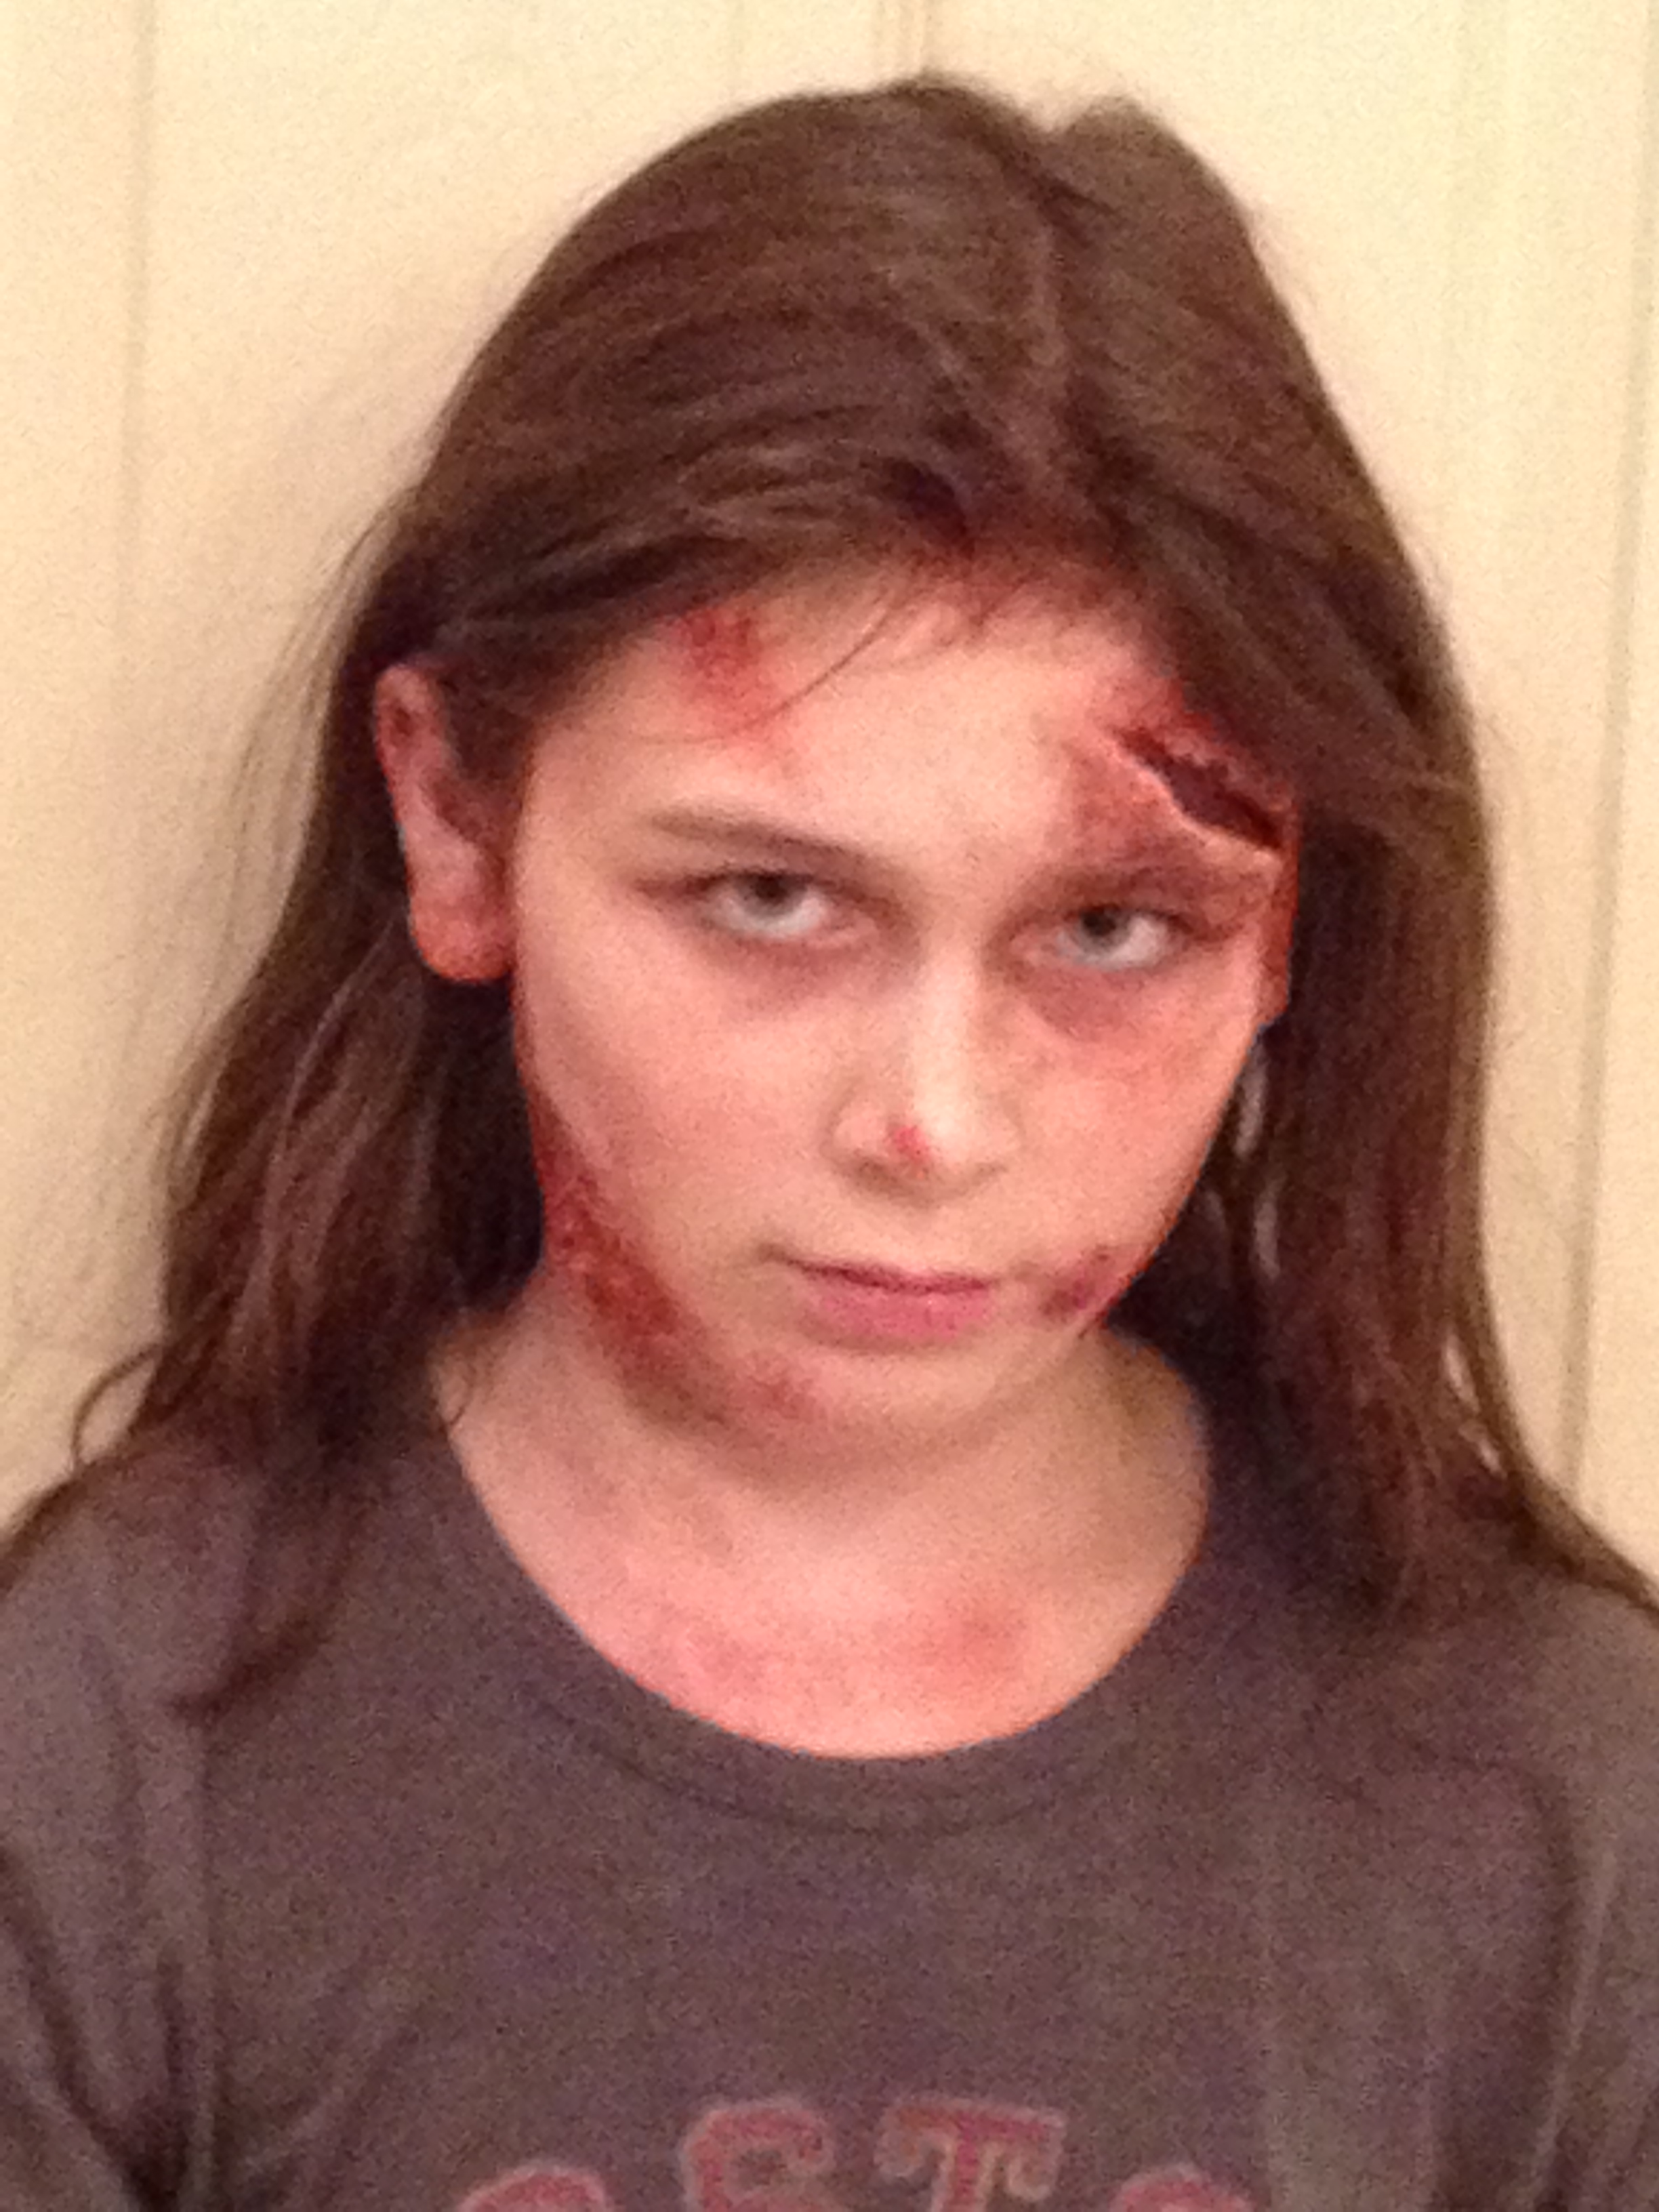 In full zombie makeup . . .